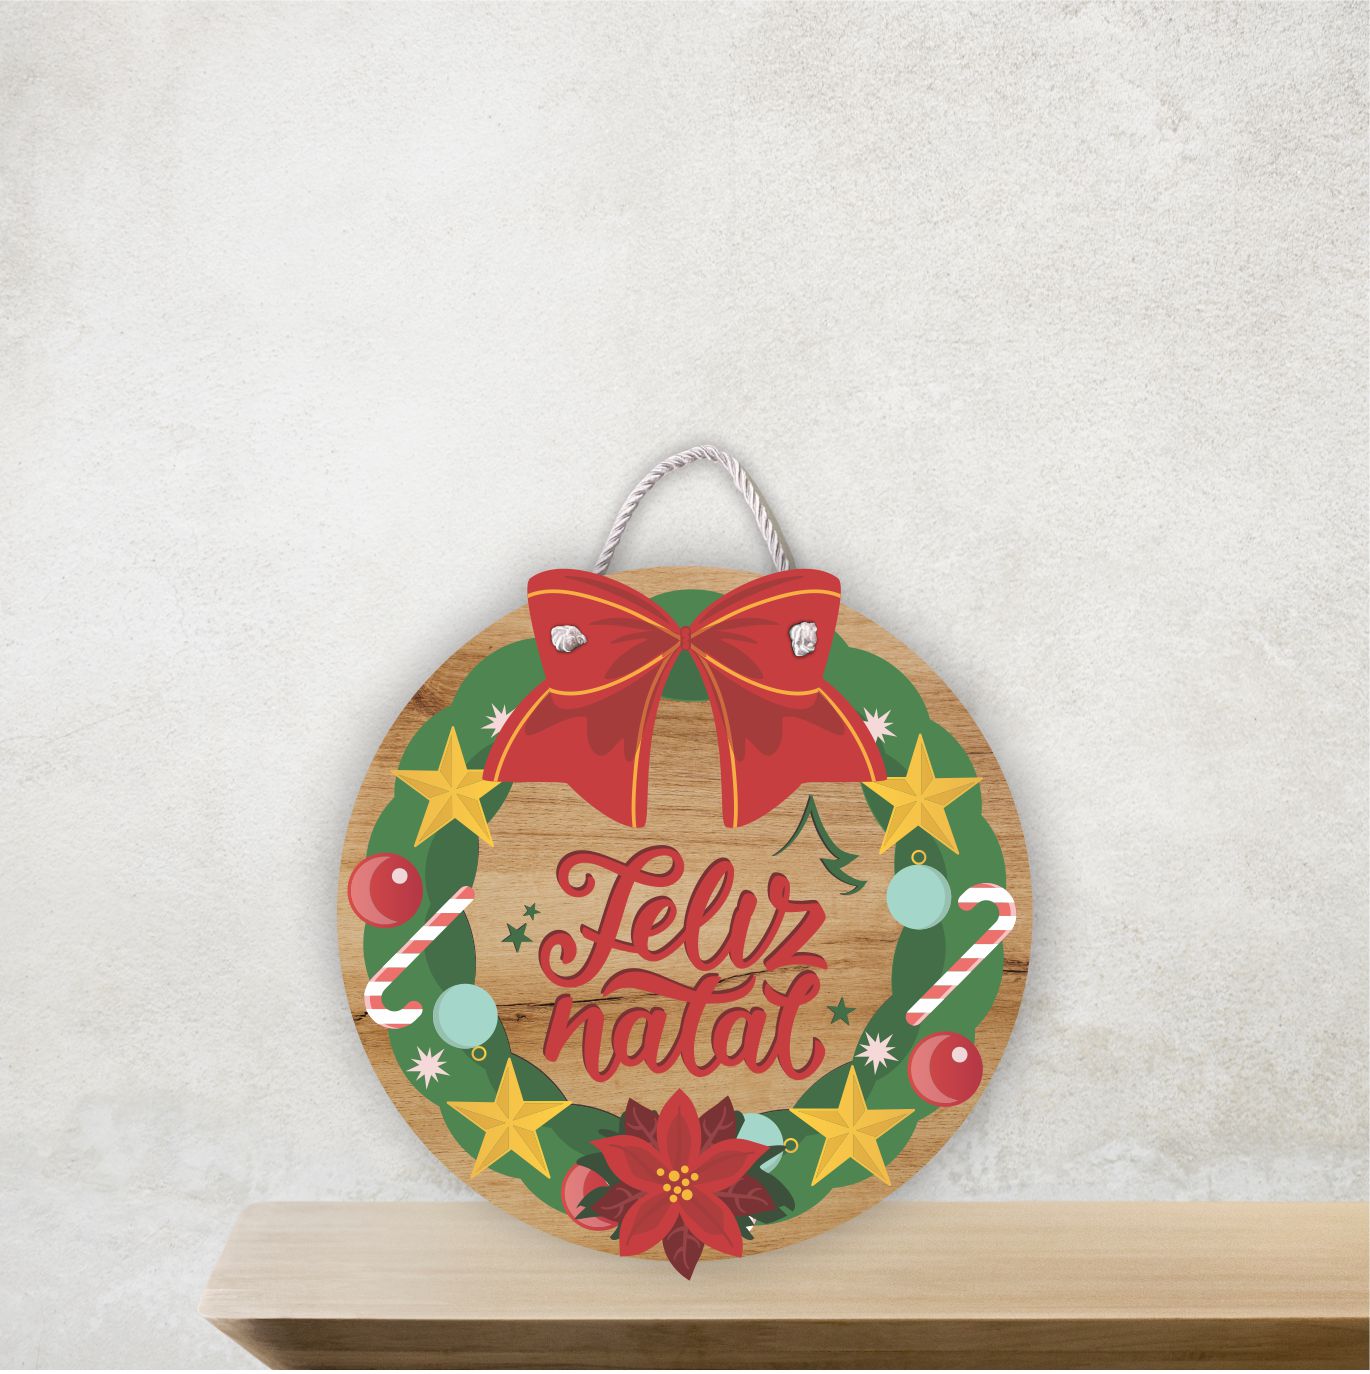 Placa Decorativa - Natal - Ho Ho Ho, Feliz Natal Placa Decorativa